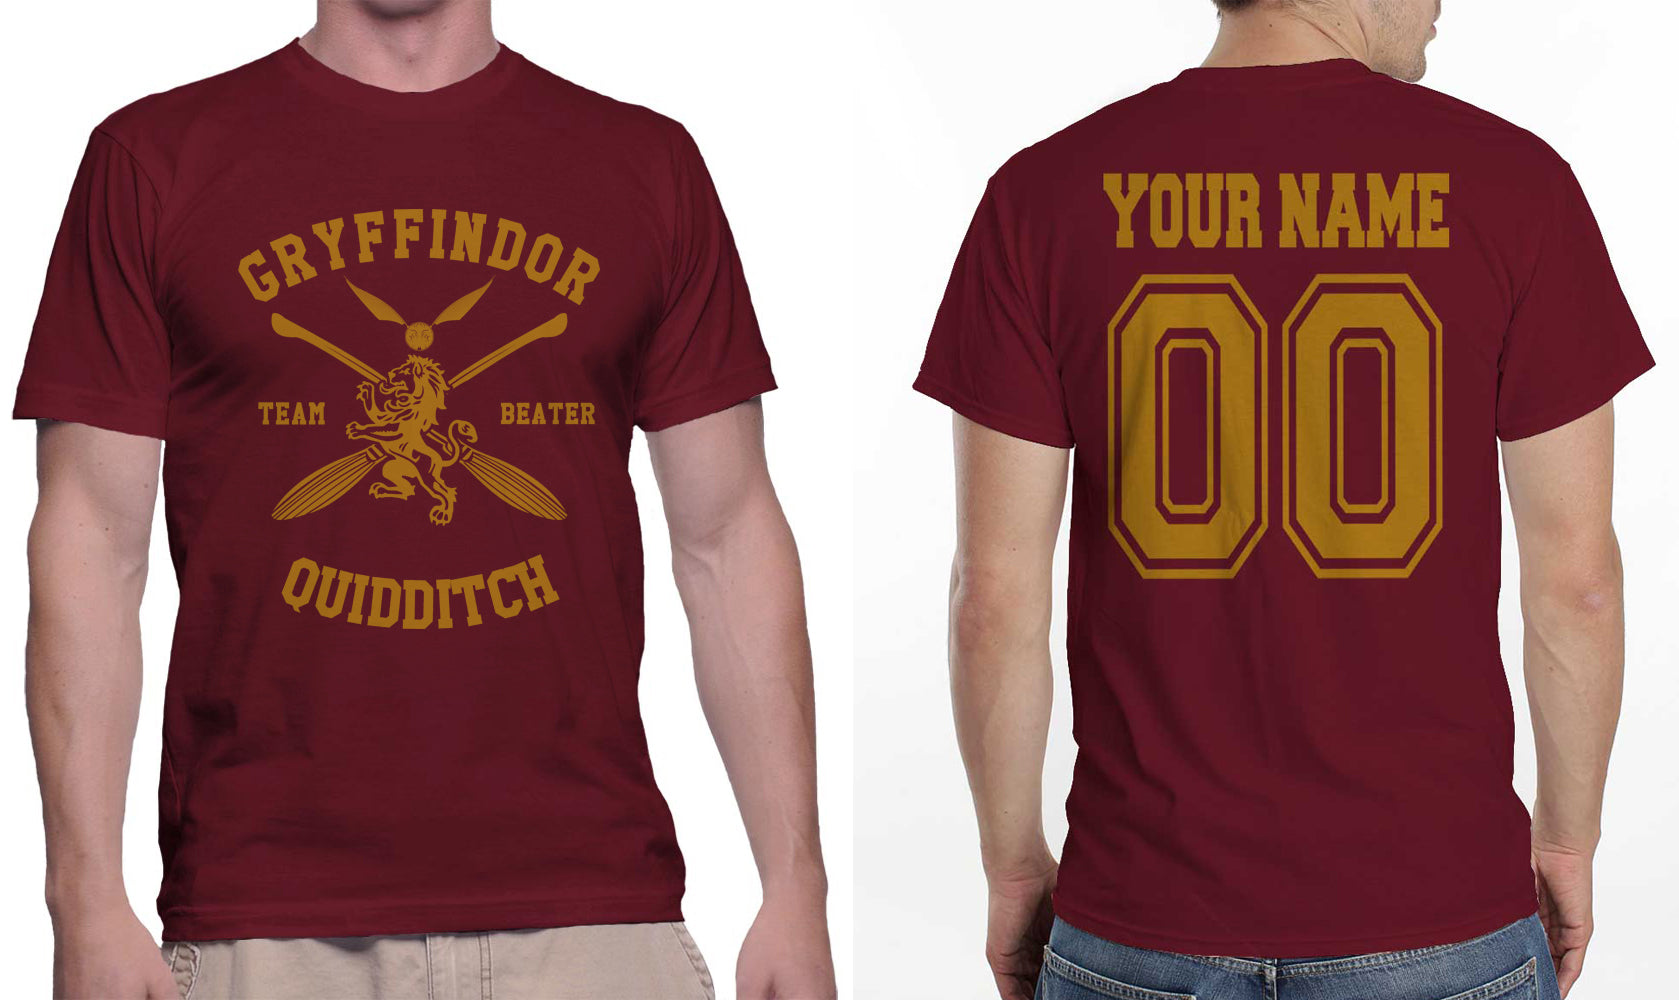 Customize Gryffindor Beater Quidditch Team Men T Shirt Tee Meh Geek